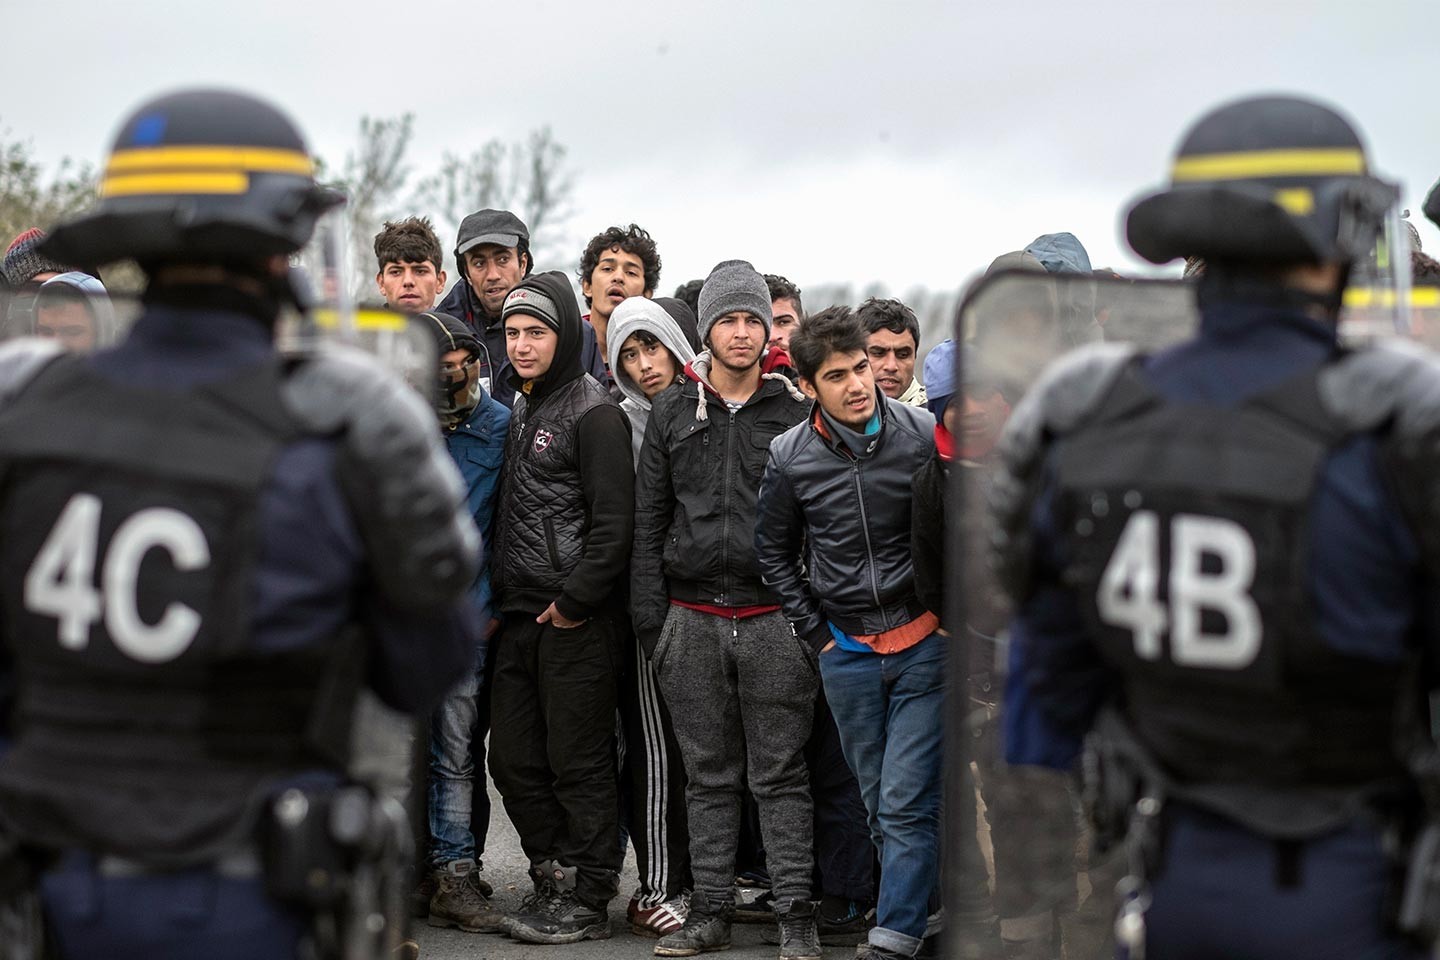 Violences policières sur migrants : « Harceler, épuiser, disperser »